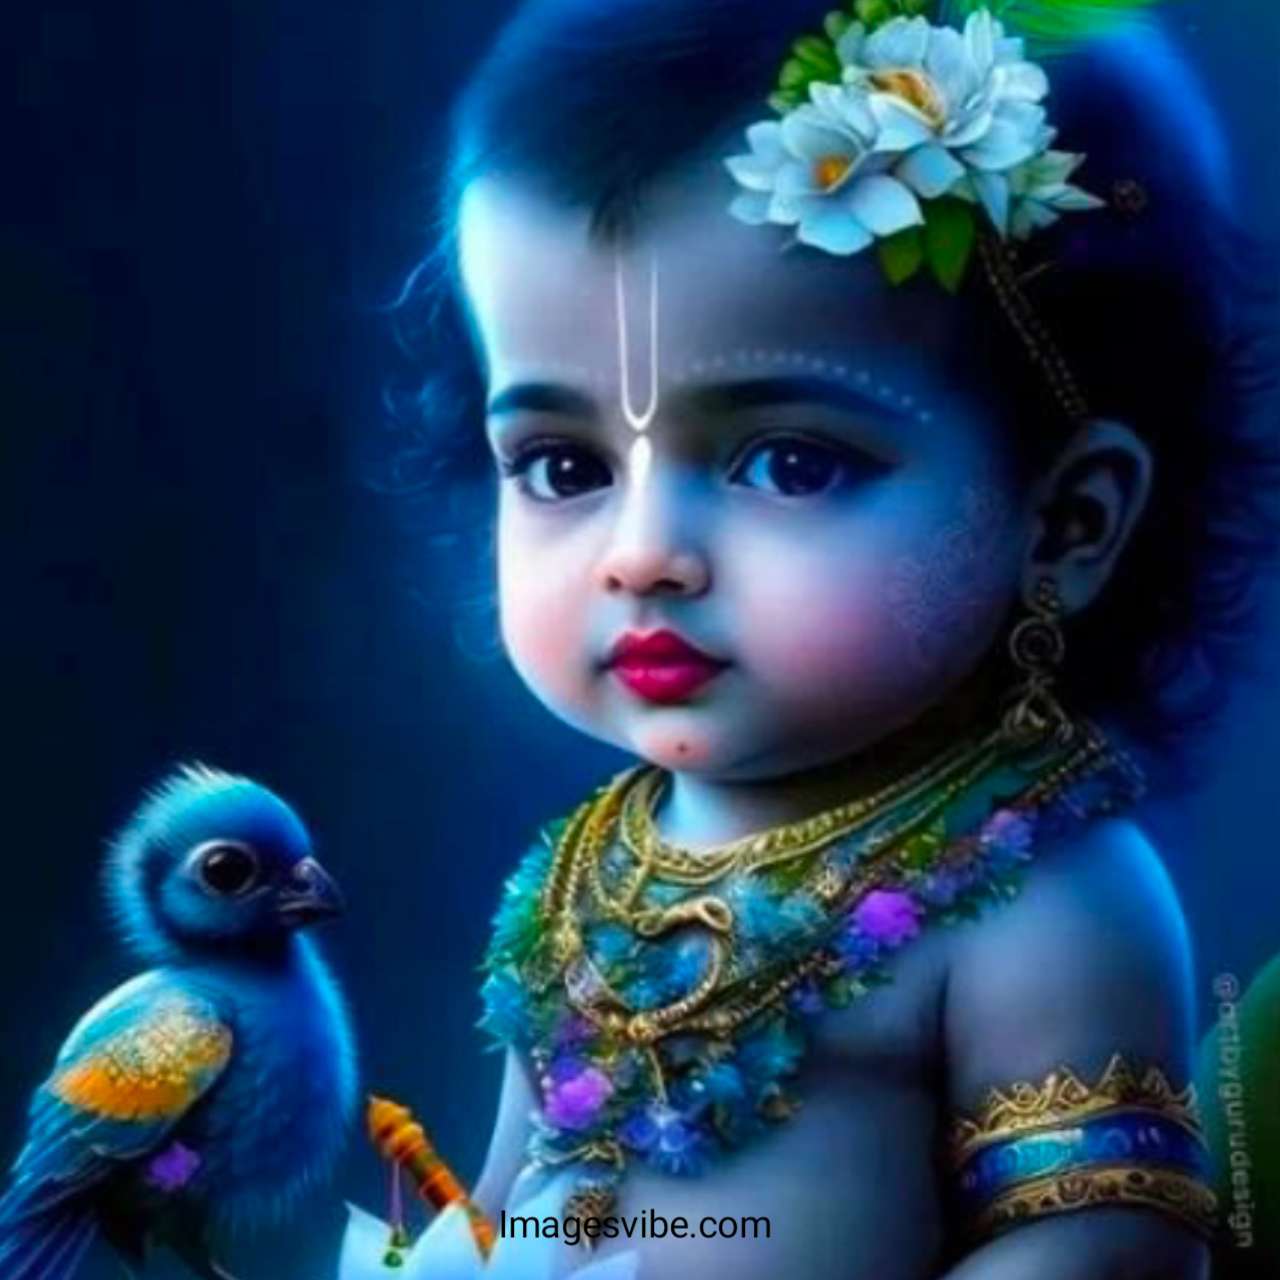 Little Baby Krishna Wallpapers - Top Free Little Baby Krishna ...